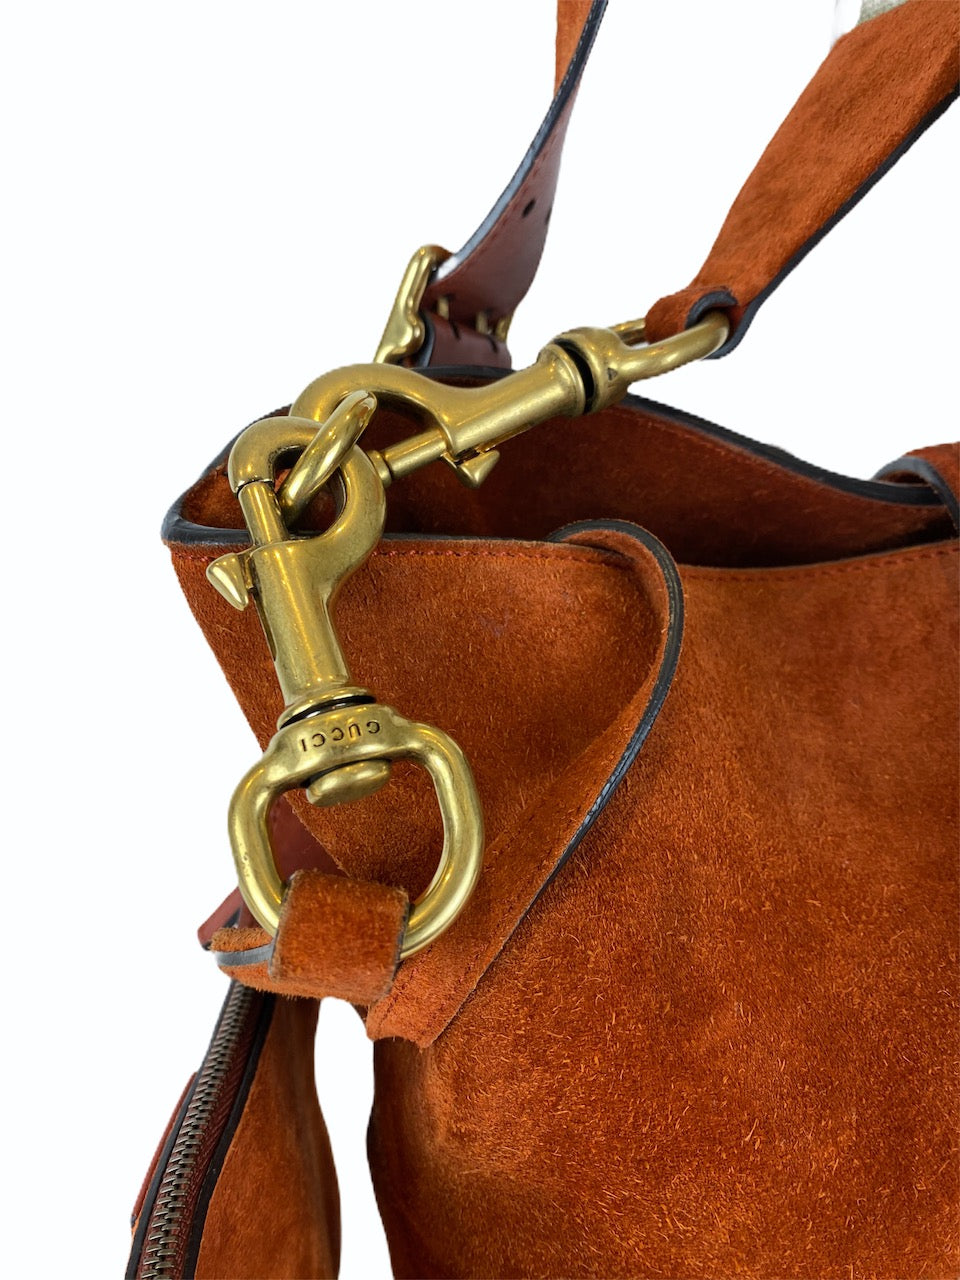 Gucci Rust Suede Leather Bucket Bag - As Seen on Instagram 2/9/20 - Siopaella Designer Exchange